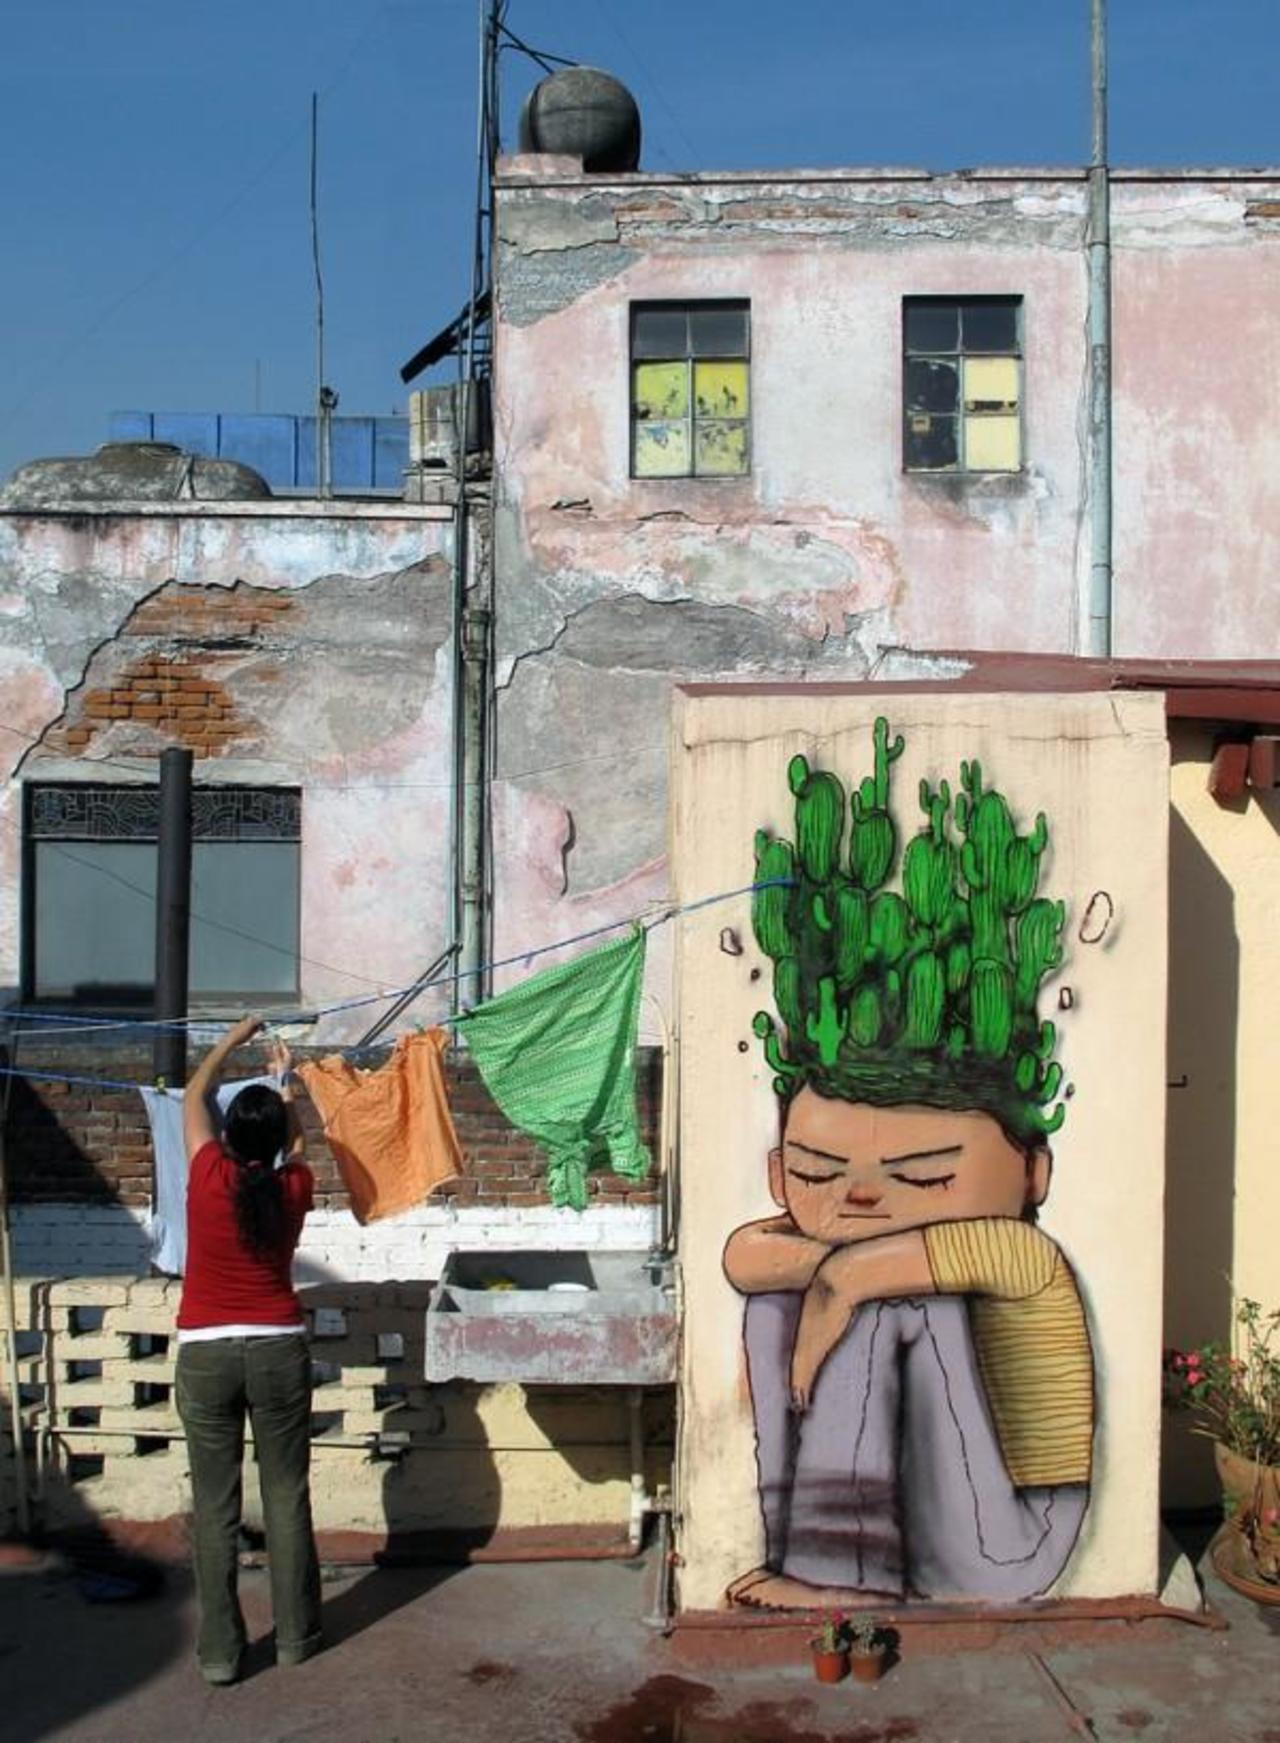 "@CmoaXWoman: Le street-art de Seth #streetart #urbanart http://t.co/LtN9jlvhmC" #graffiti  #urbanart #mural #art #aerosol #spraypaint